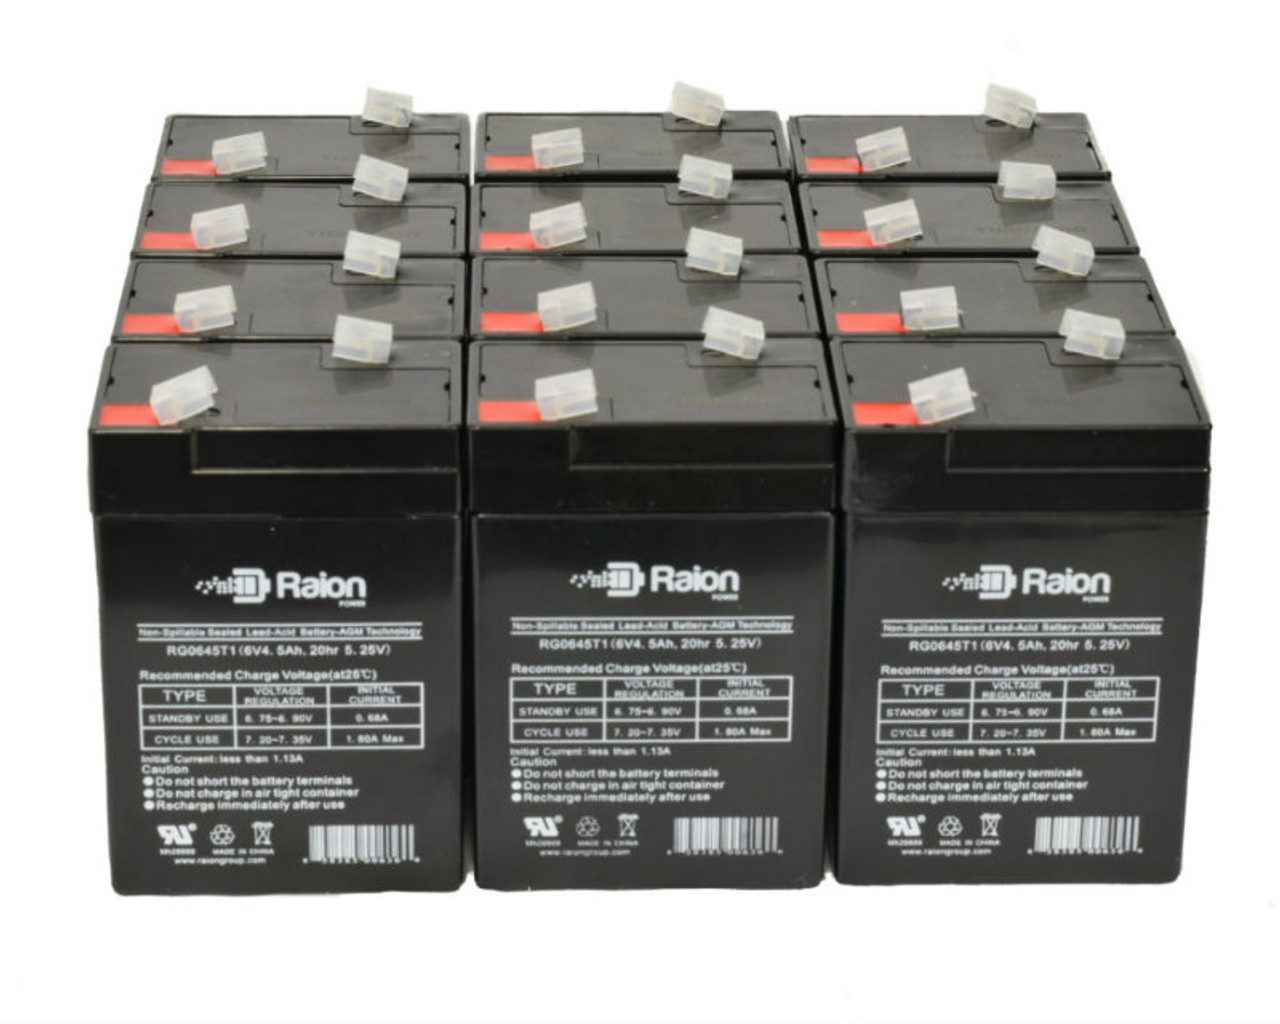 Raion Power 6V 4.5Ah Replacement Emergency Light Battery for Sentry Lite SCR-525-21 - 12 Pack